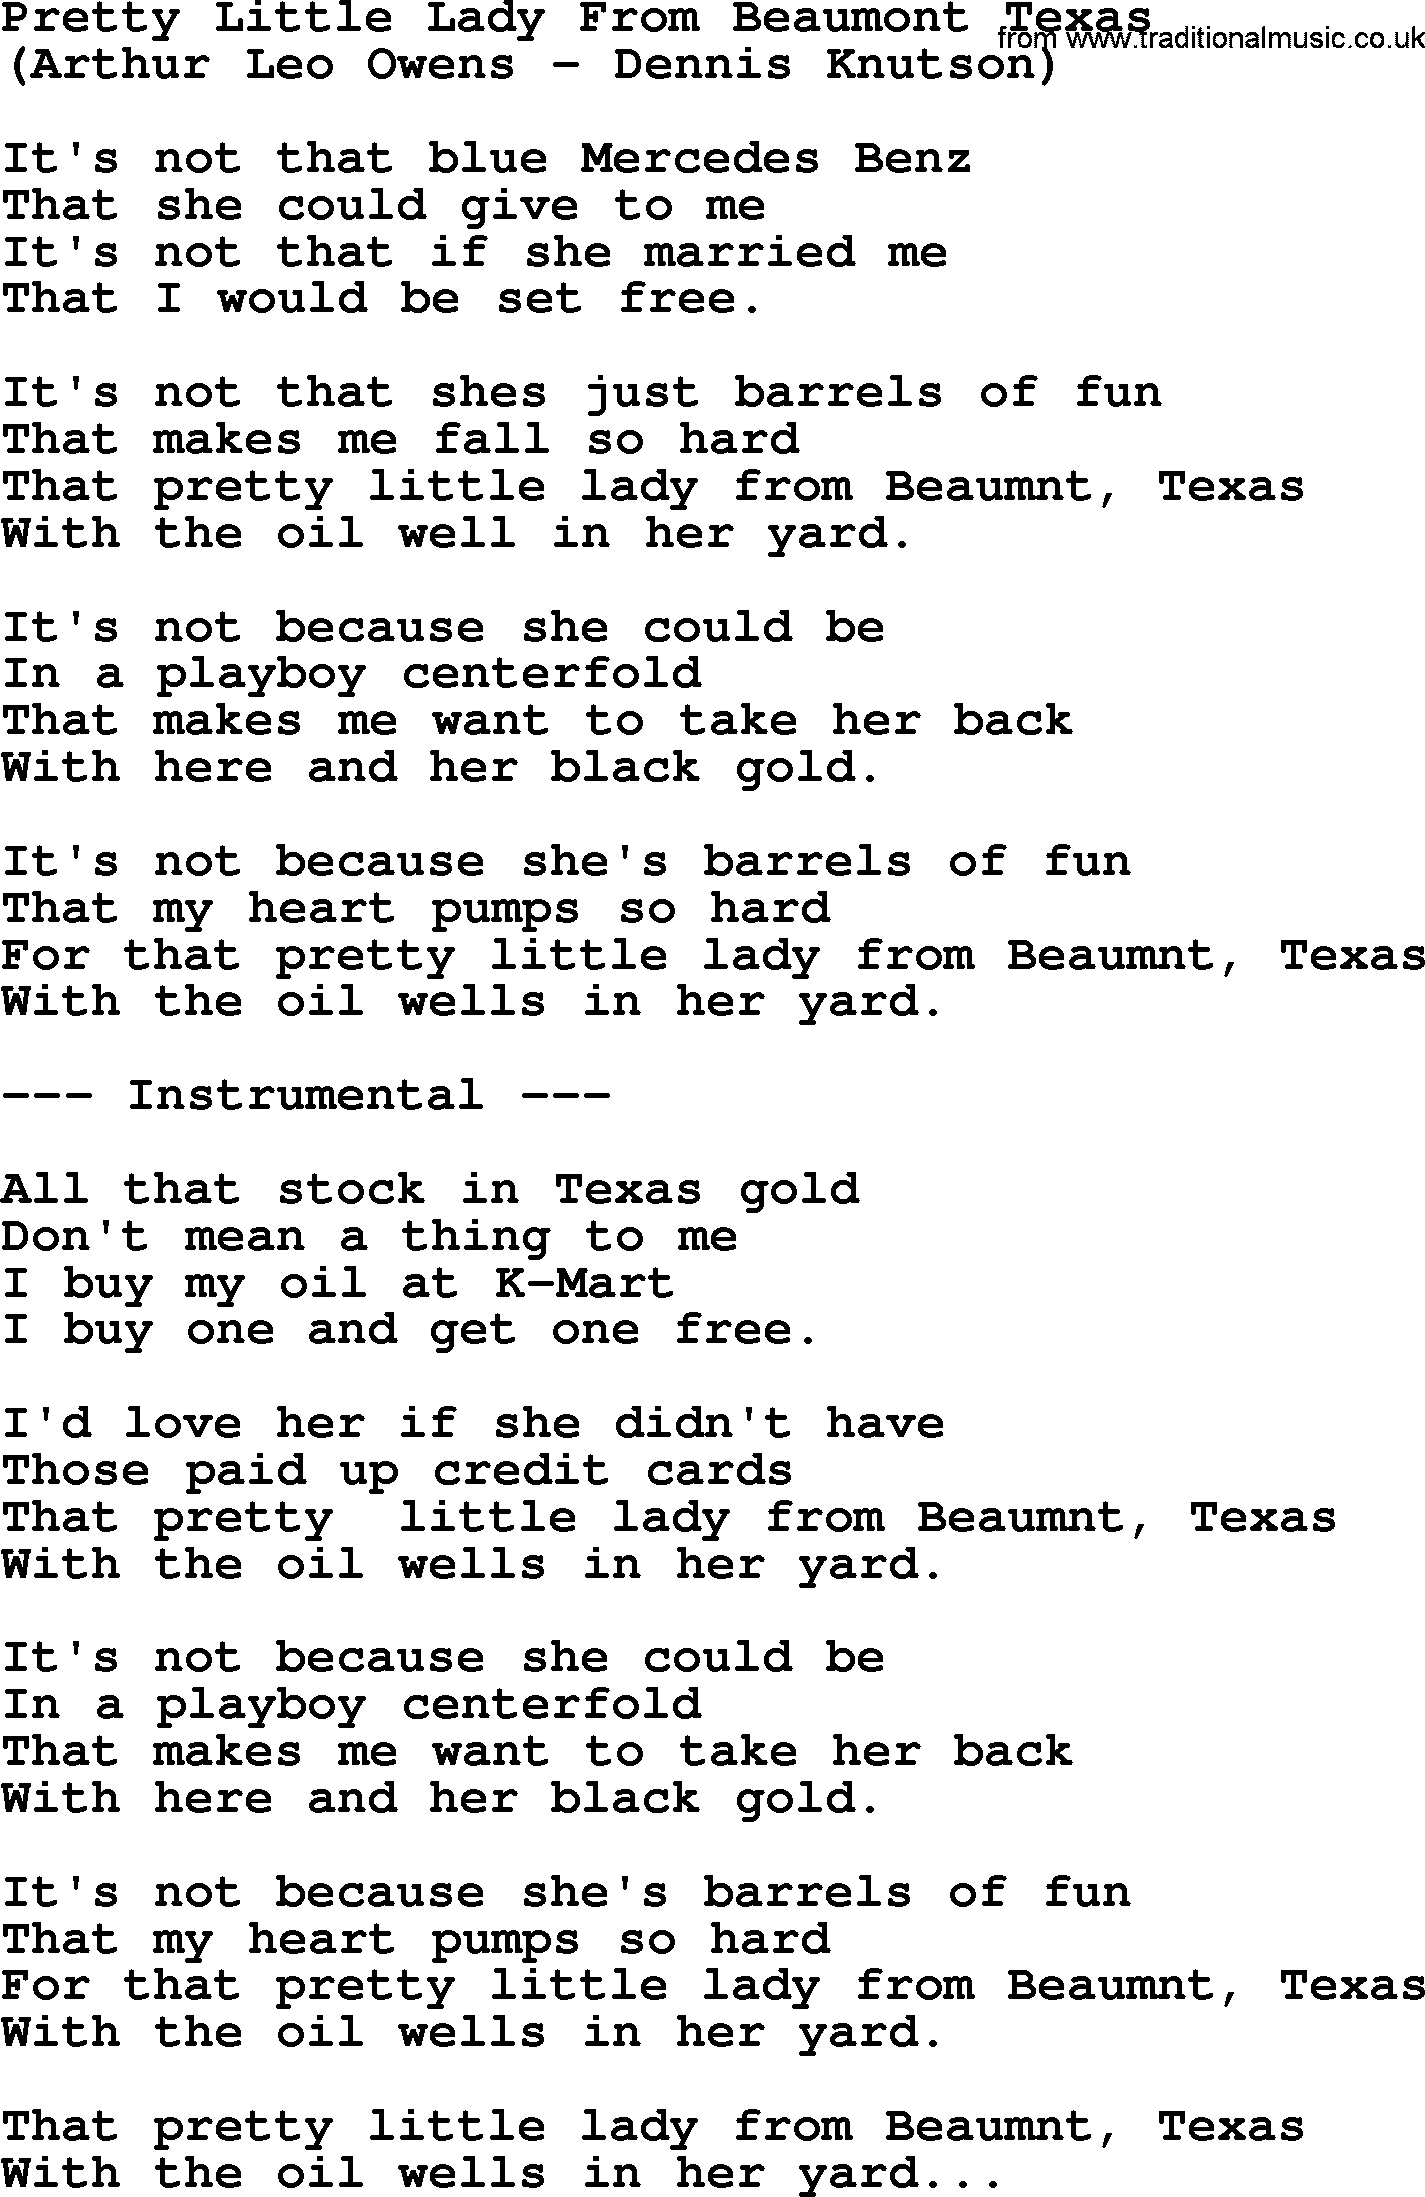 George Jones song: Pretty Little Lady From Beaumont Texas, lyrics